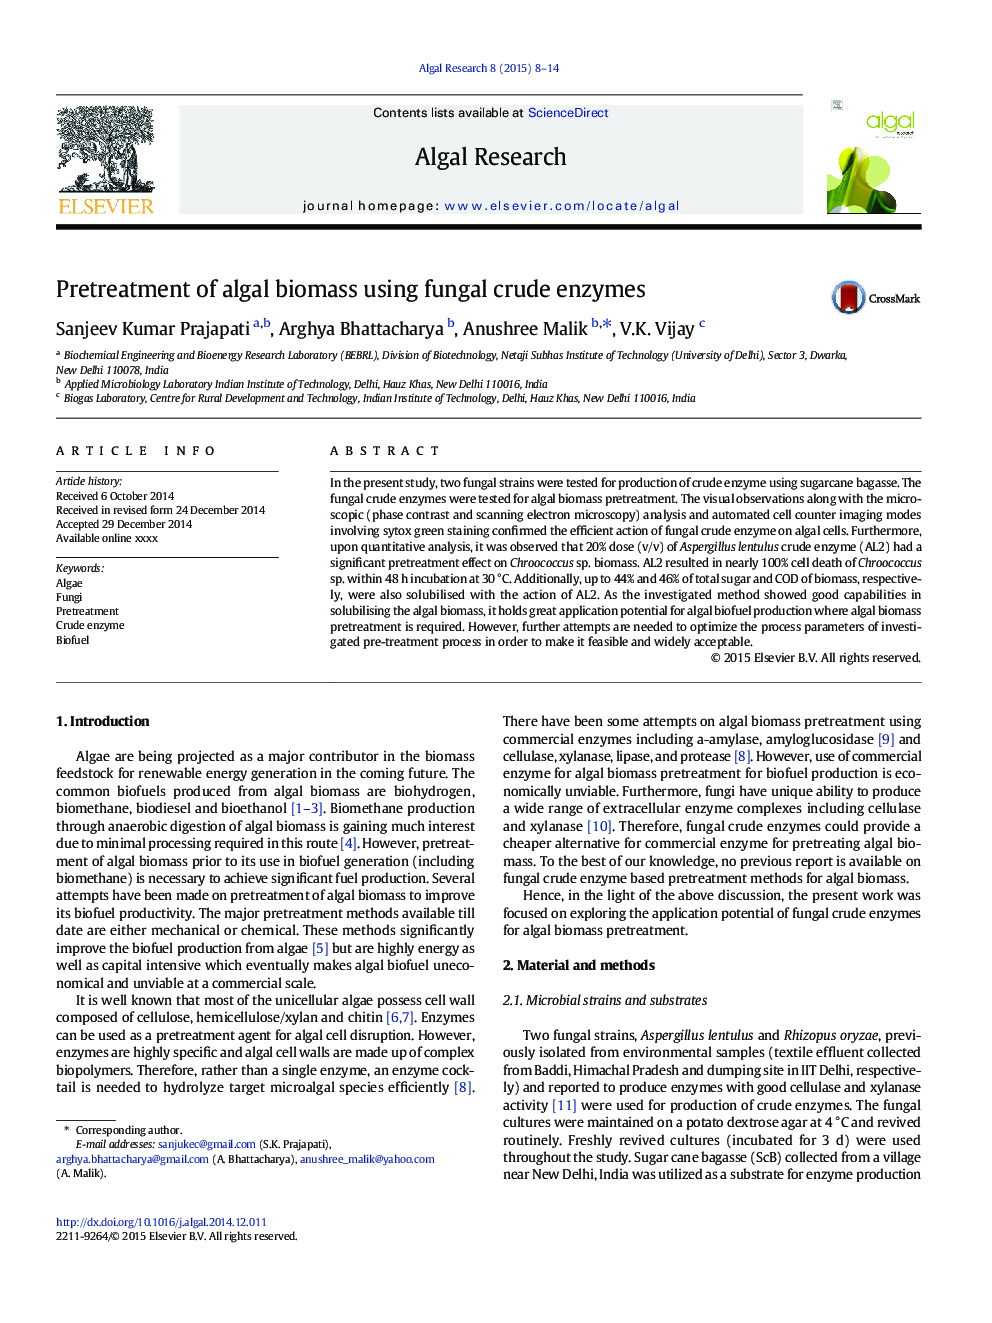 Pretreatment of algal biomass using fungal crude enzymes